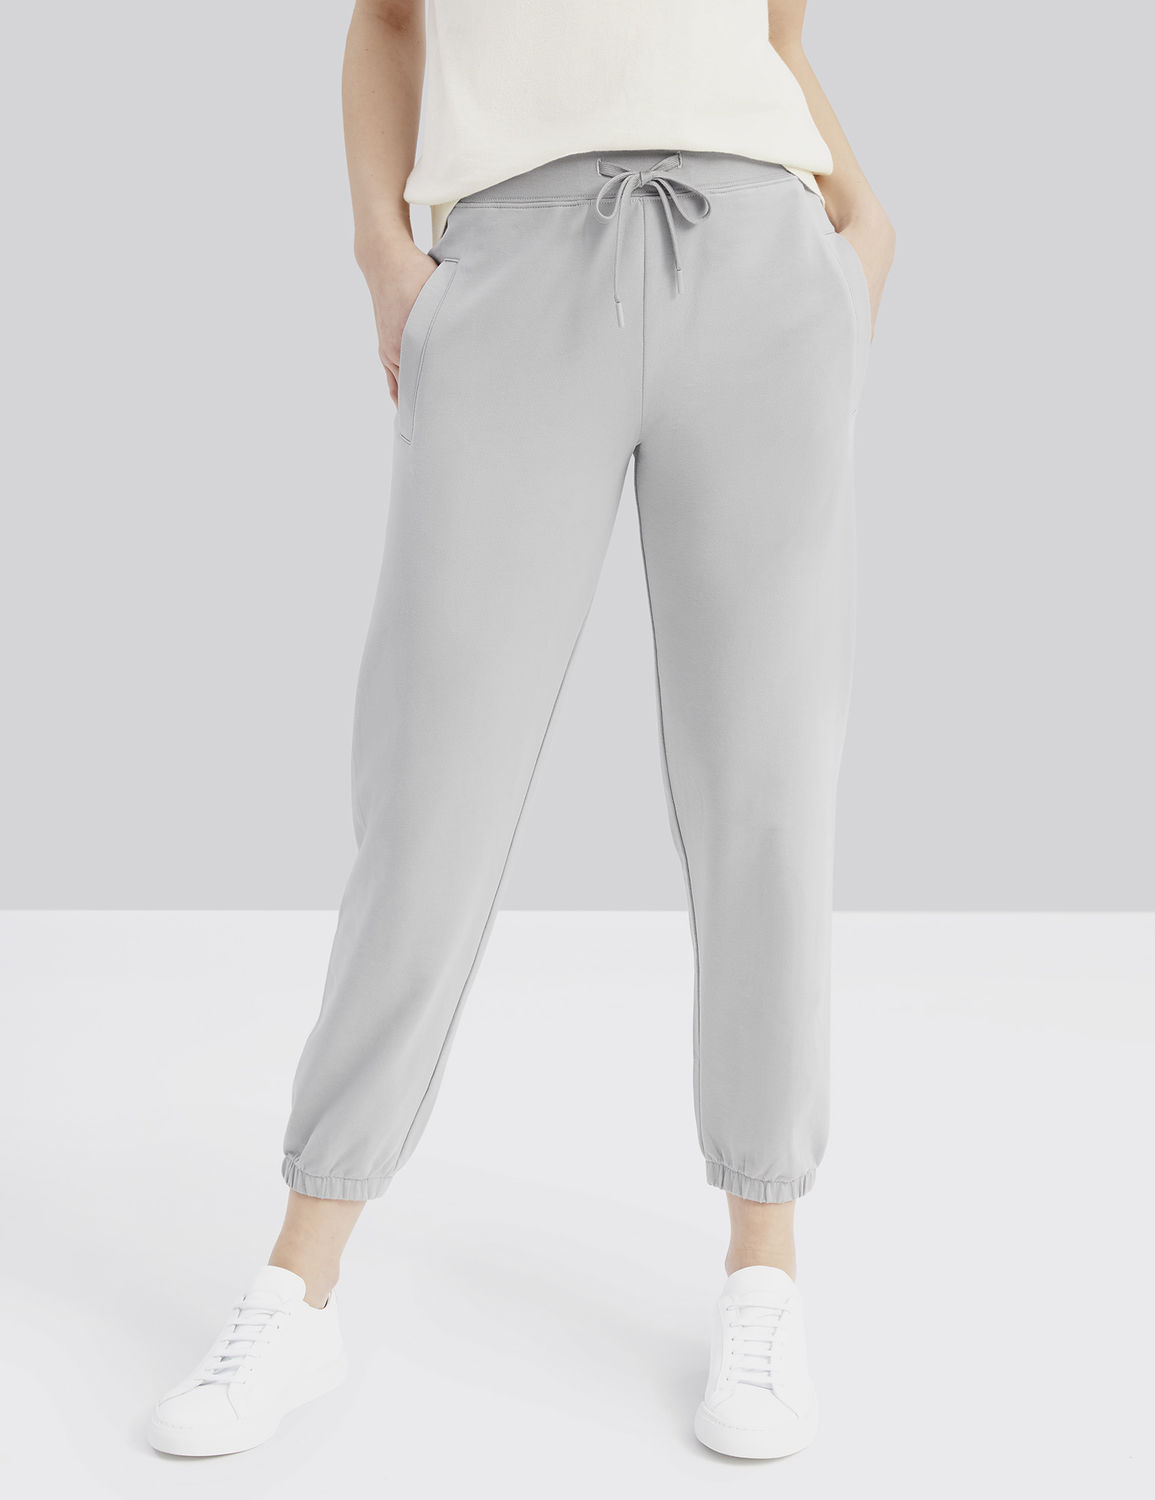 high quality grey womens sweatpants